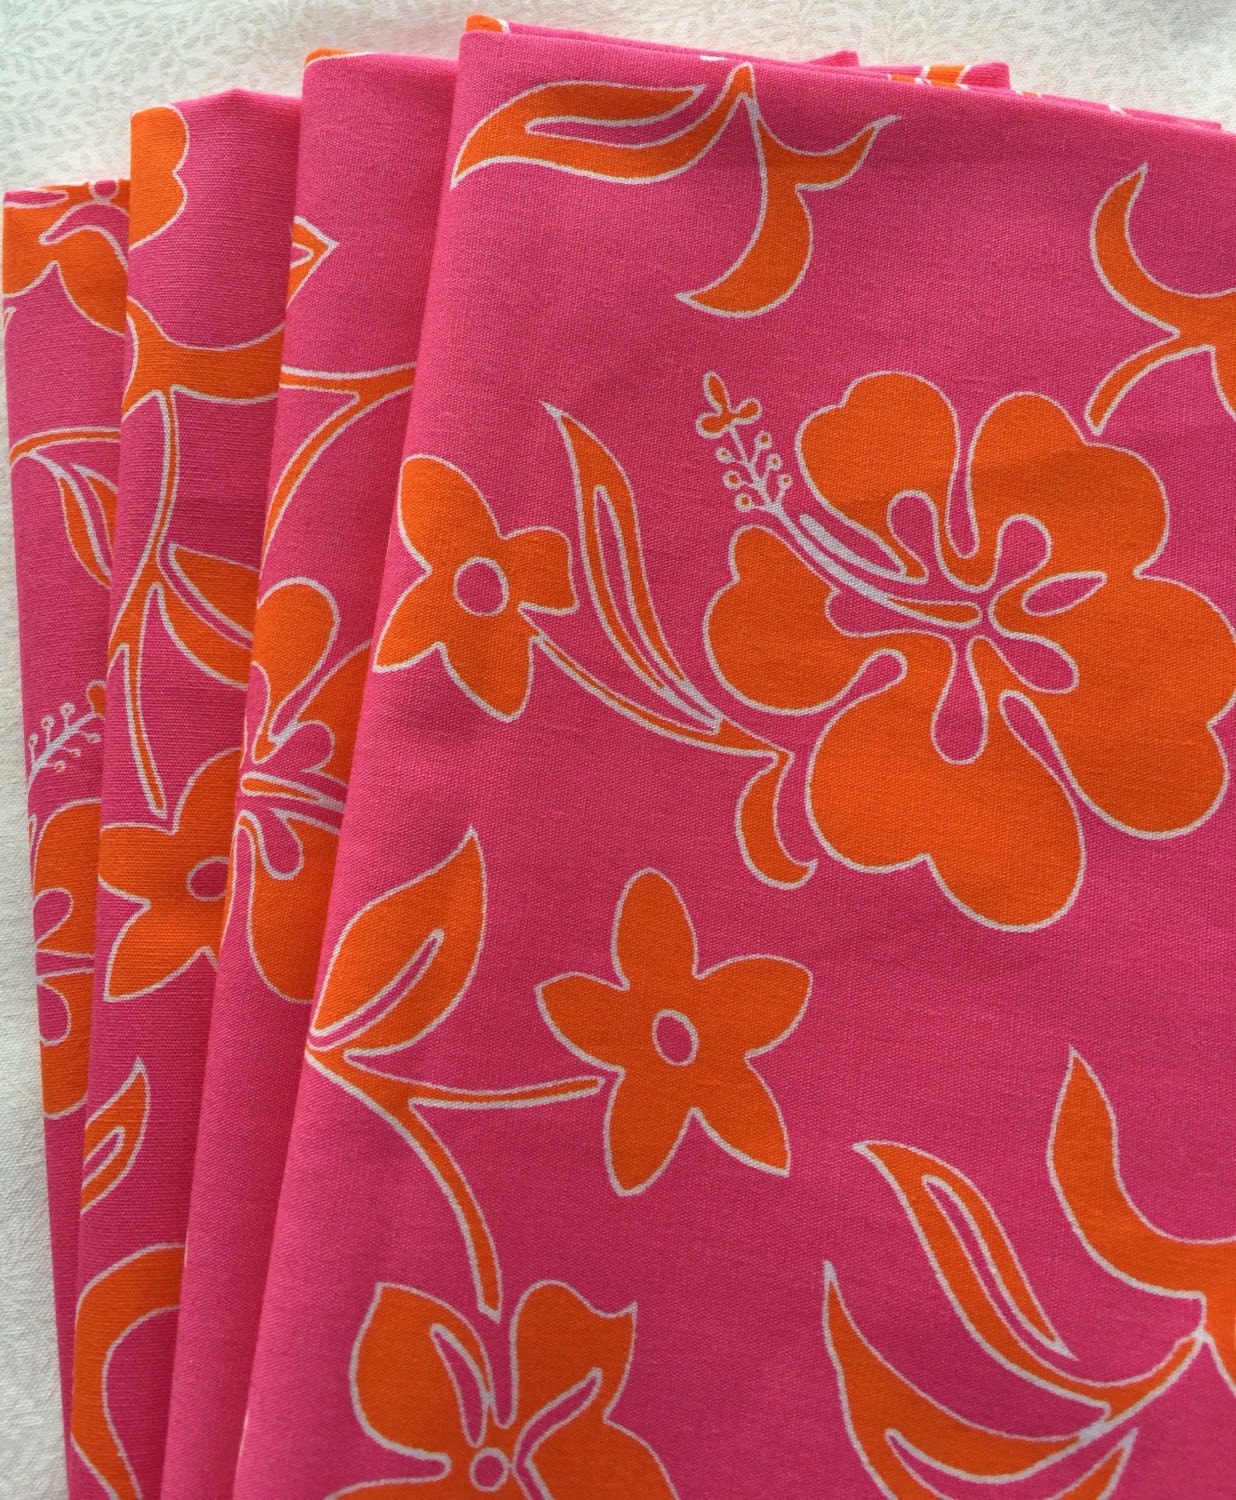 Napkins Fabric Napkins Cloth Napkins MADE IN HAWAII Cloth